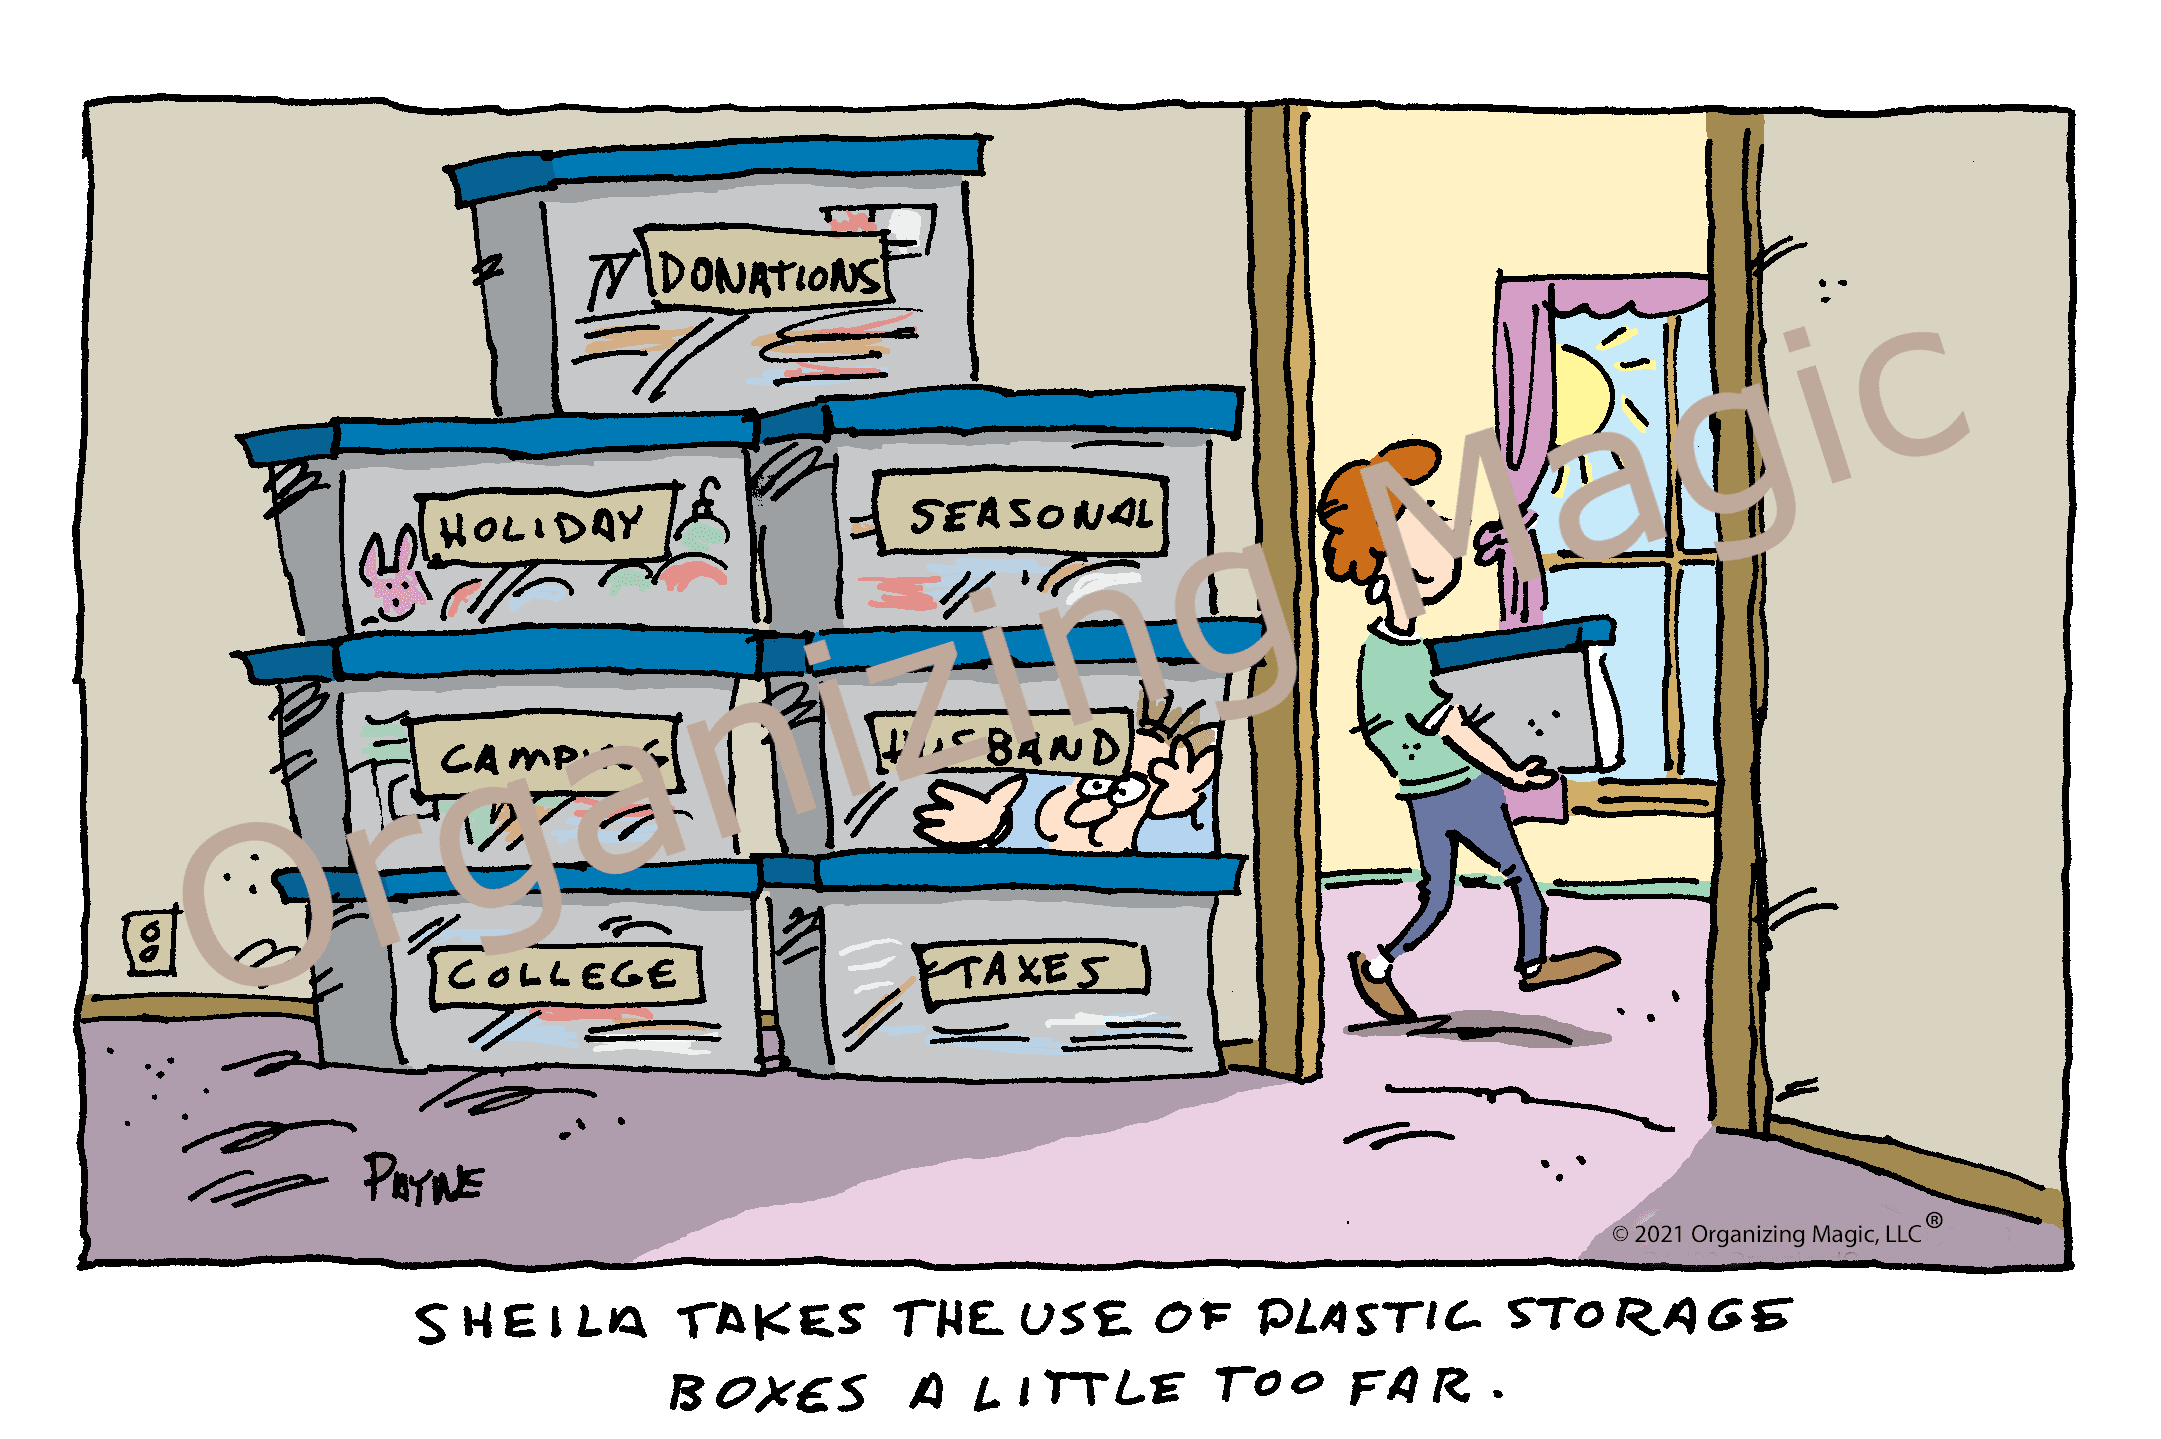 Husband in Storage
